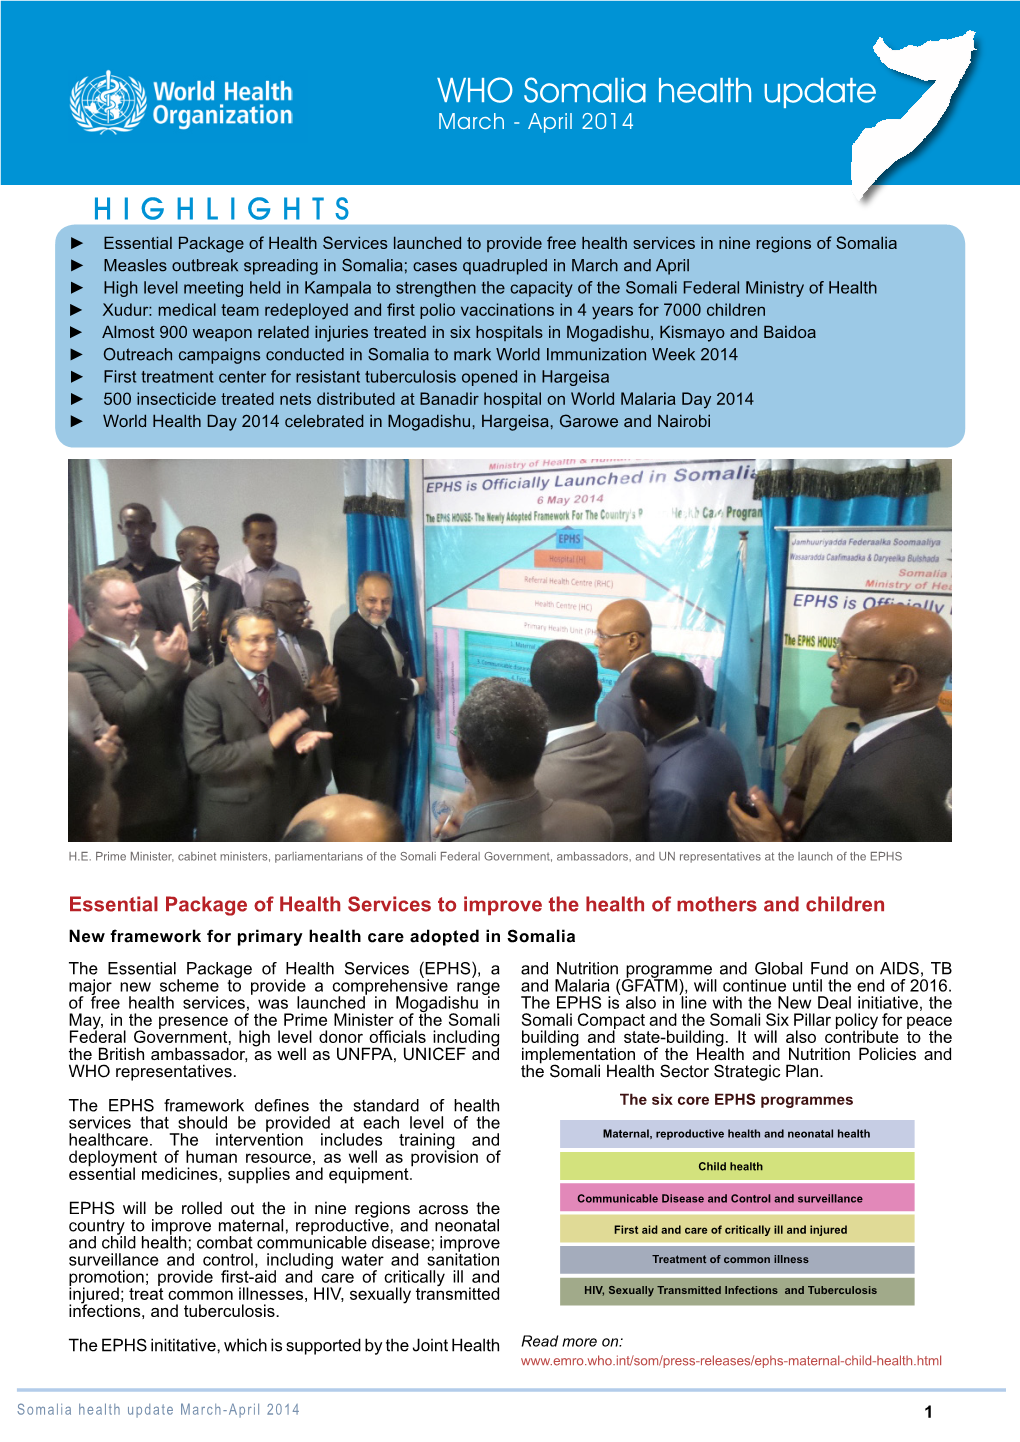 WHO Somalia Health Update March - April 2014